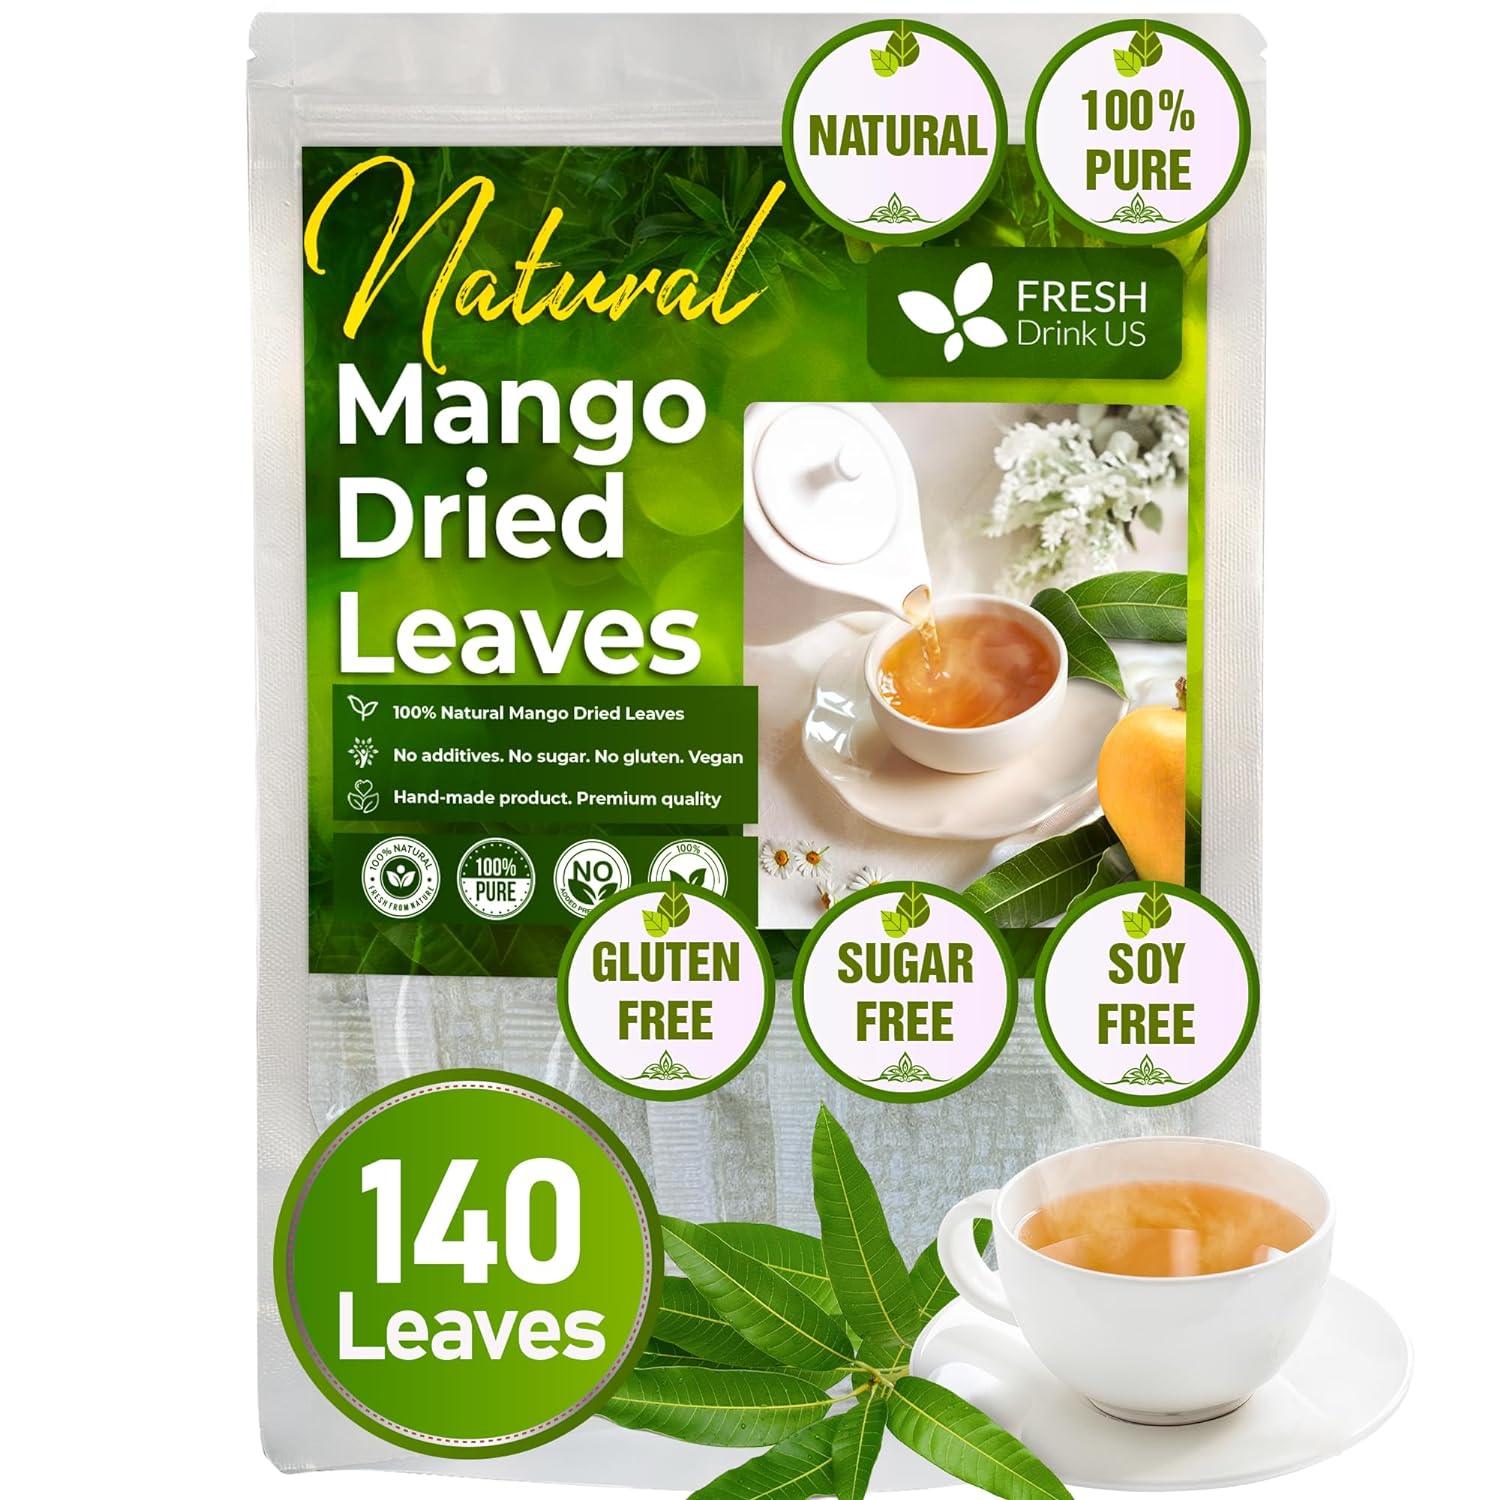 Mango Leaf, Whole Dried Leaves, Tea Bags, Powder, 100% Natural & Pure from Mango Leaves. Mango Dried Leaves. Loose Leaf Mango Herbal Tea. Mango Leaf Tea. No Sugar, No Caffeine, No Gluten, Vegan. - FreshDrinkUS - Natural and Premium Herbal Tea